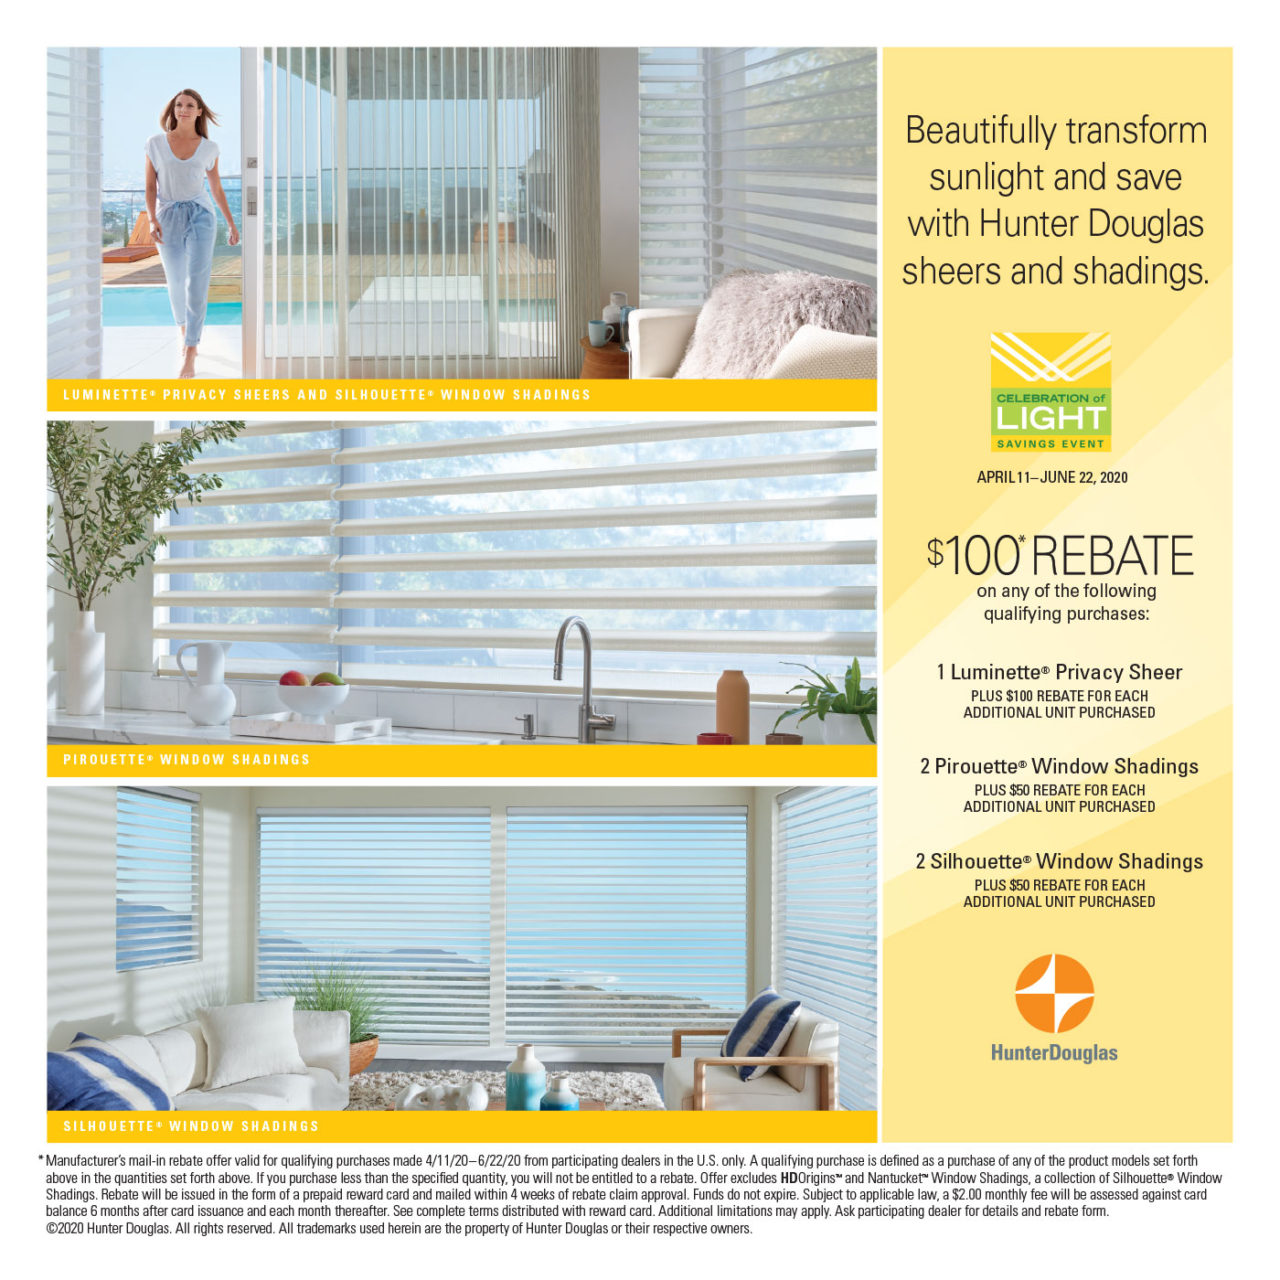 100-rebate-on-silhouette-window-shadings-living-room-blinds-blinds